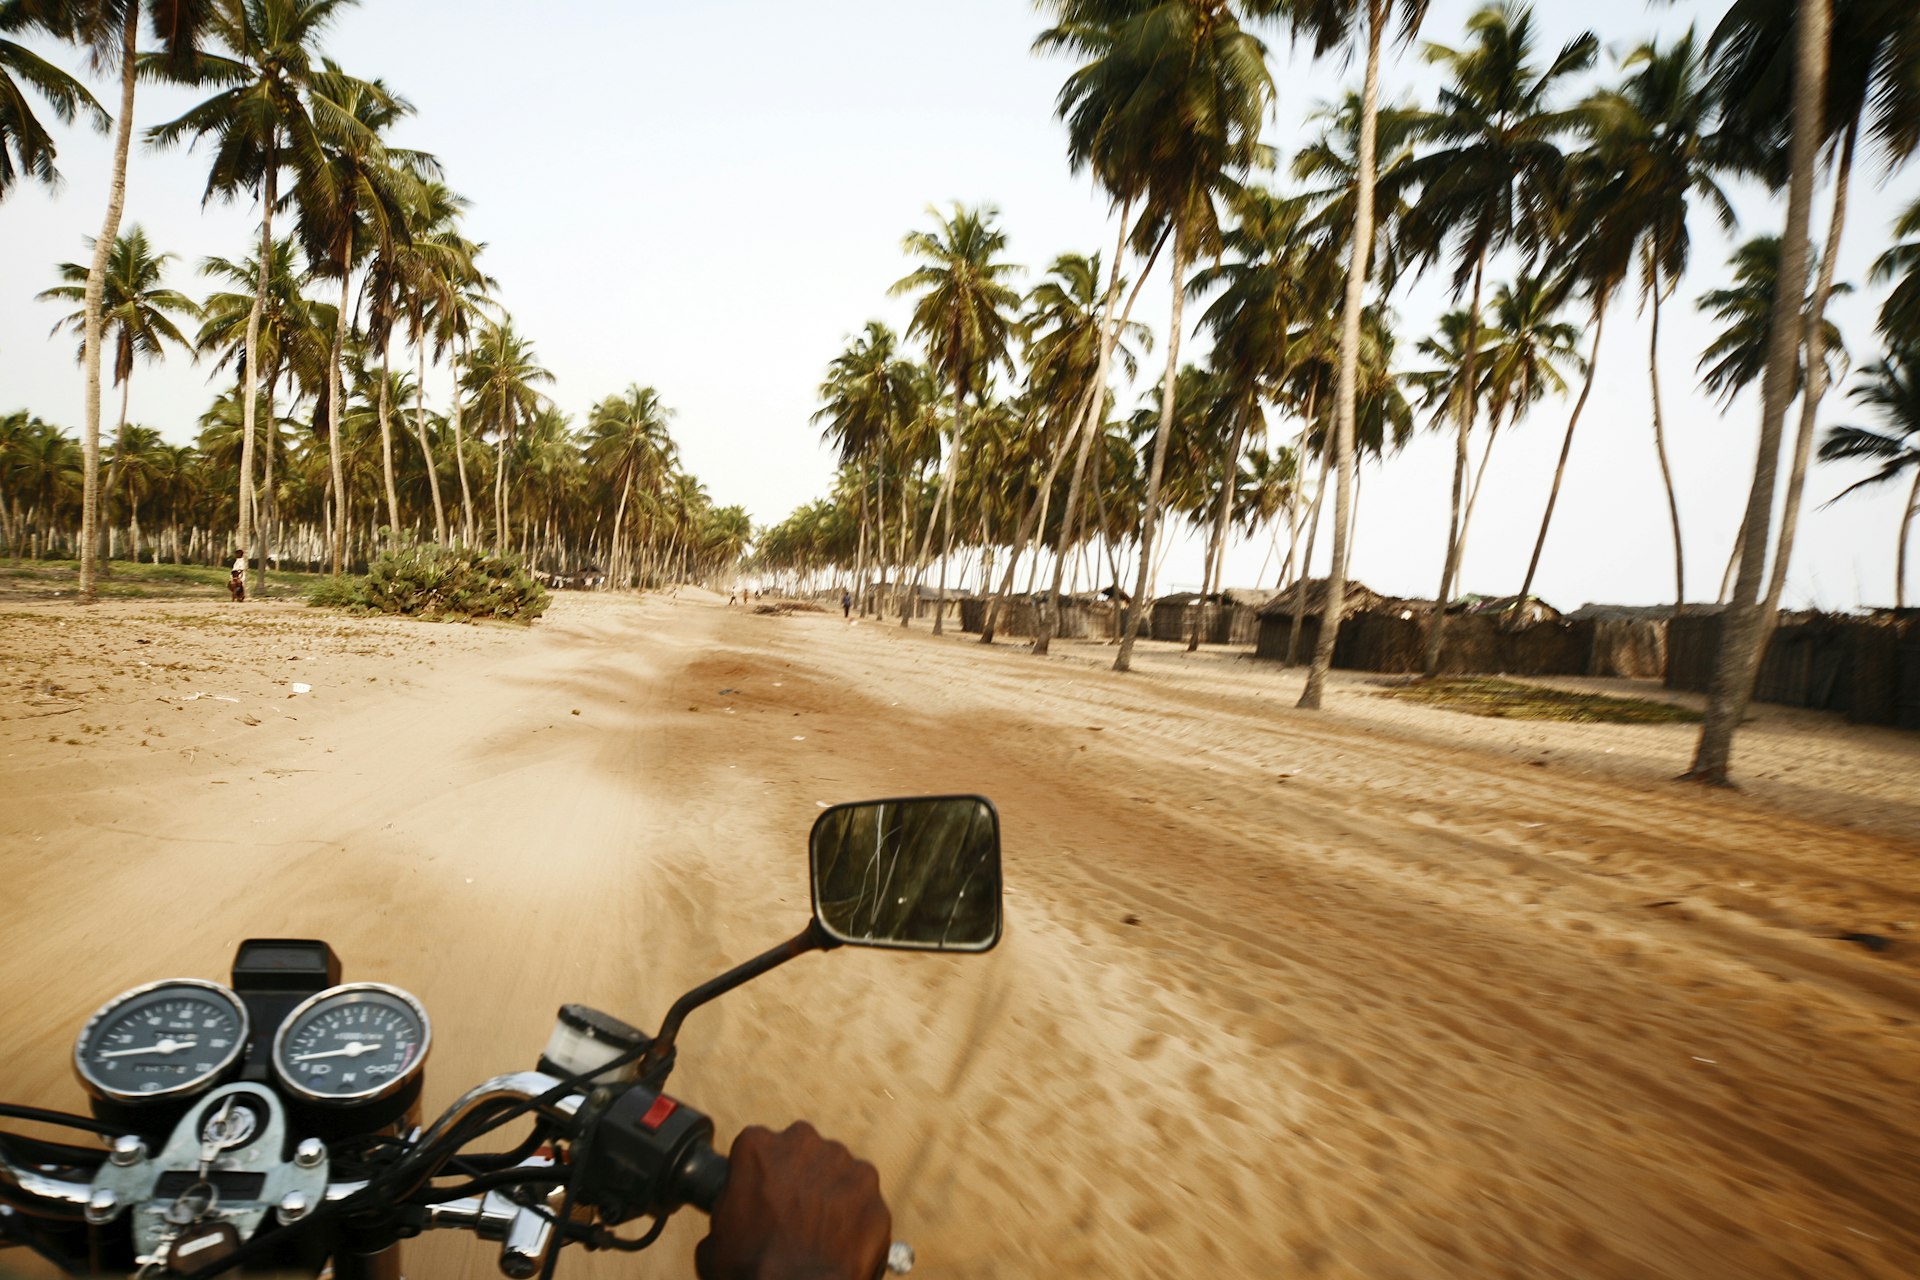 A motorcycle rides along a sandy palm-lined track alongside a beach